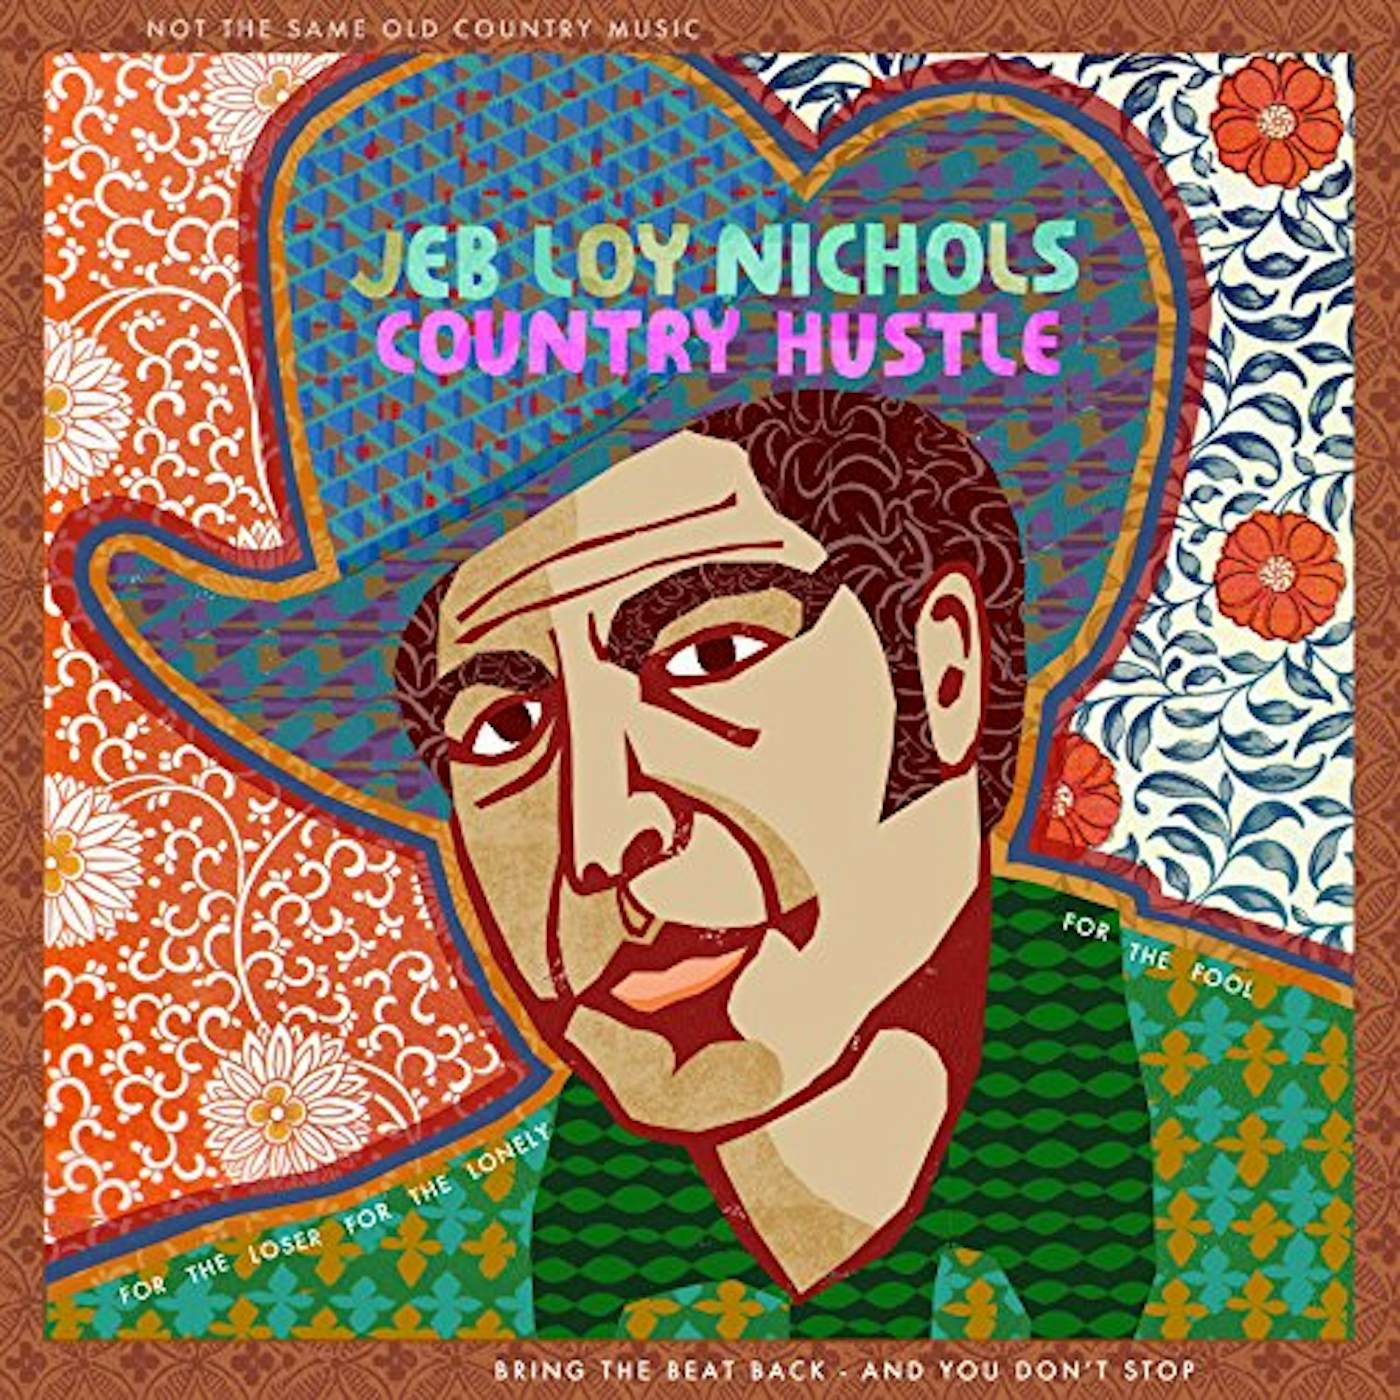 Jeb Loy Nichols Country Hustle Vinyl Record